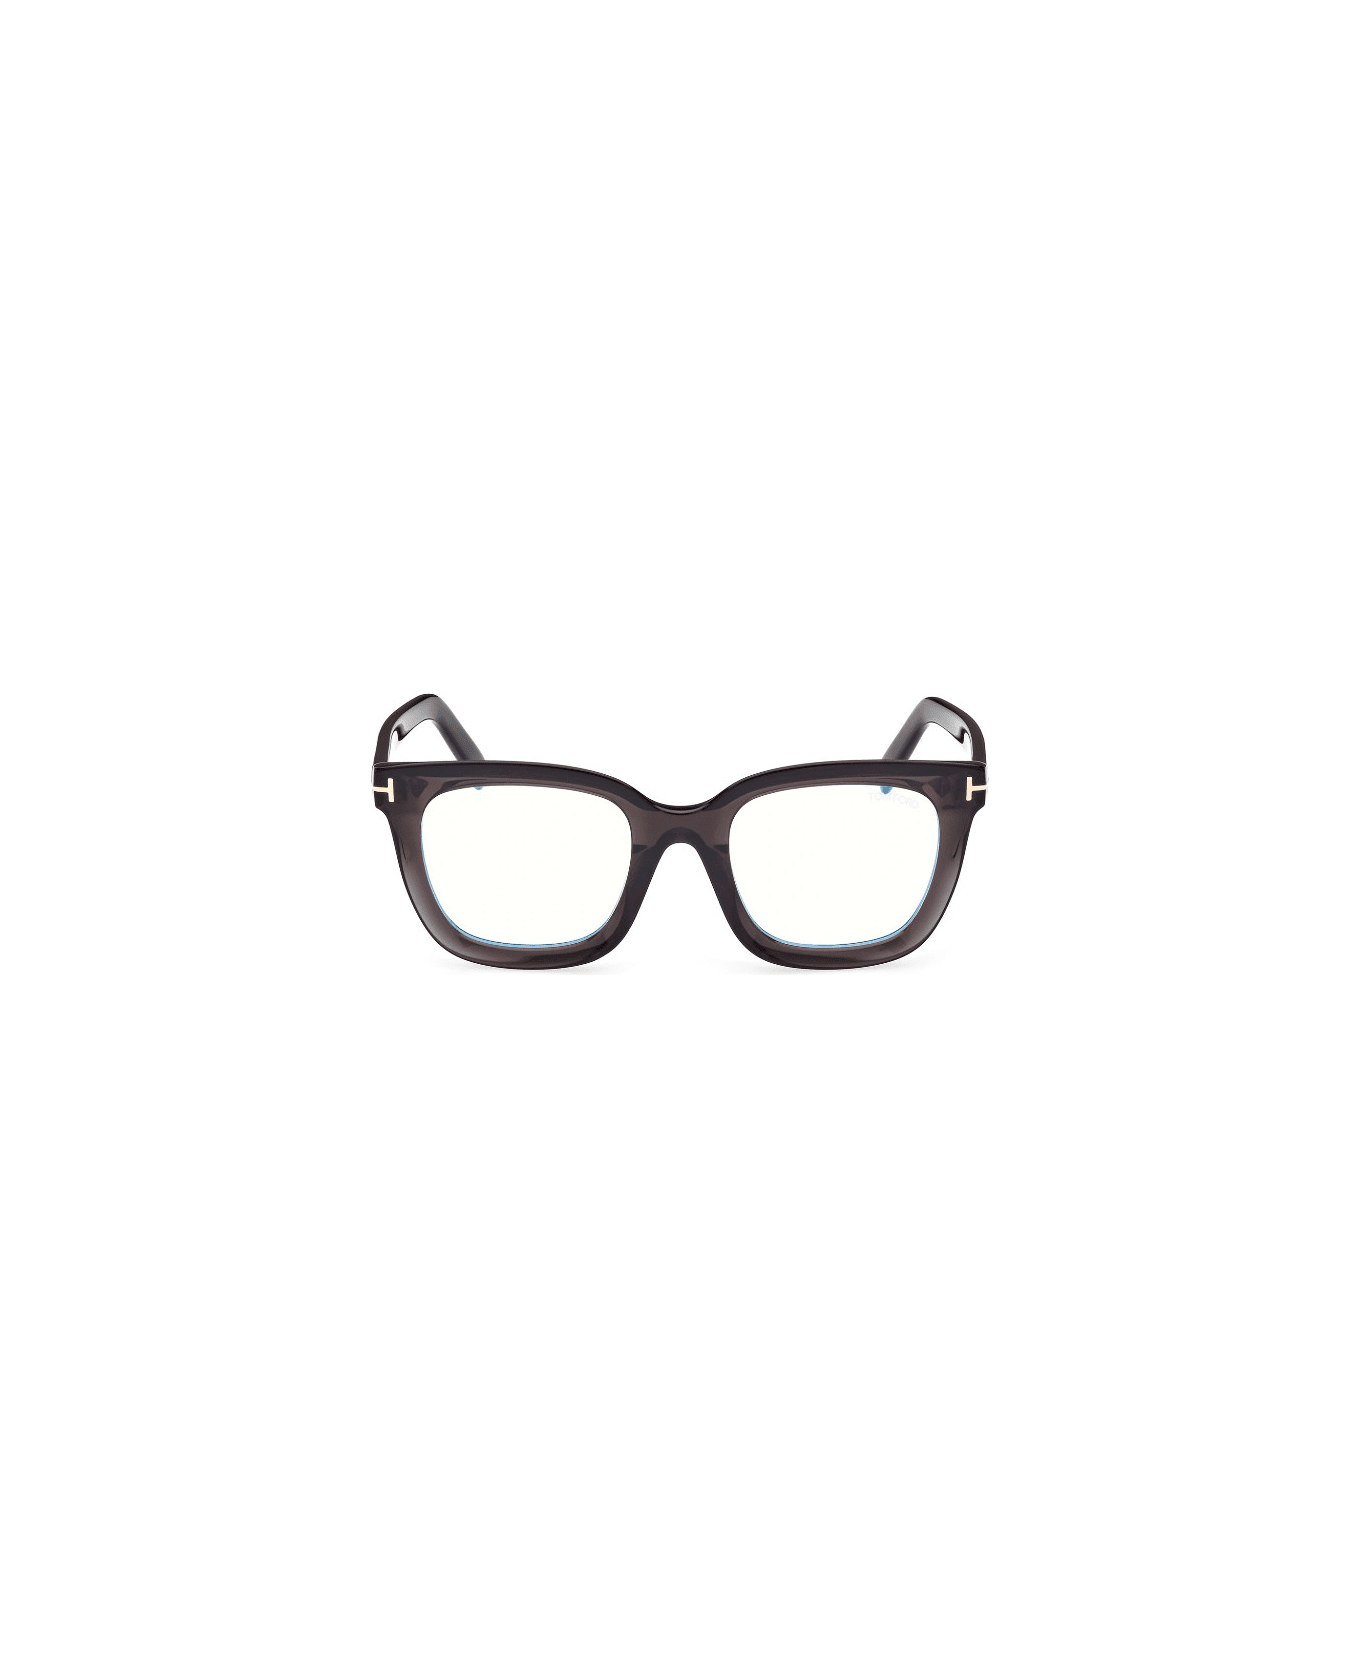 Tom Ford Eyewear TF5880 020 Glasses